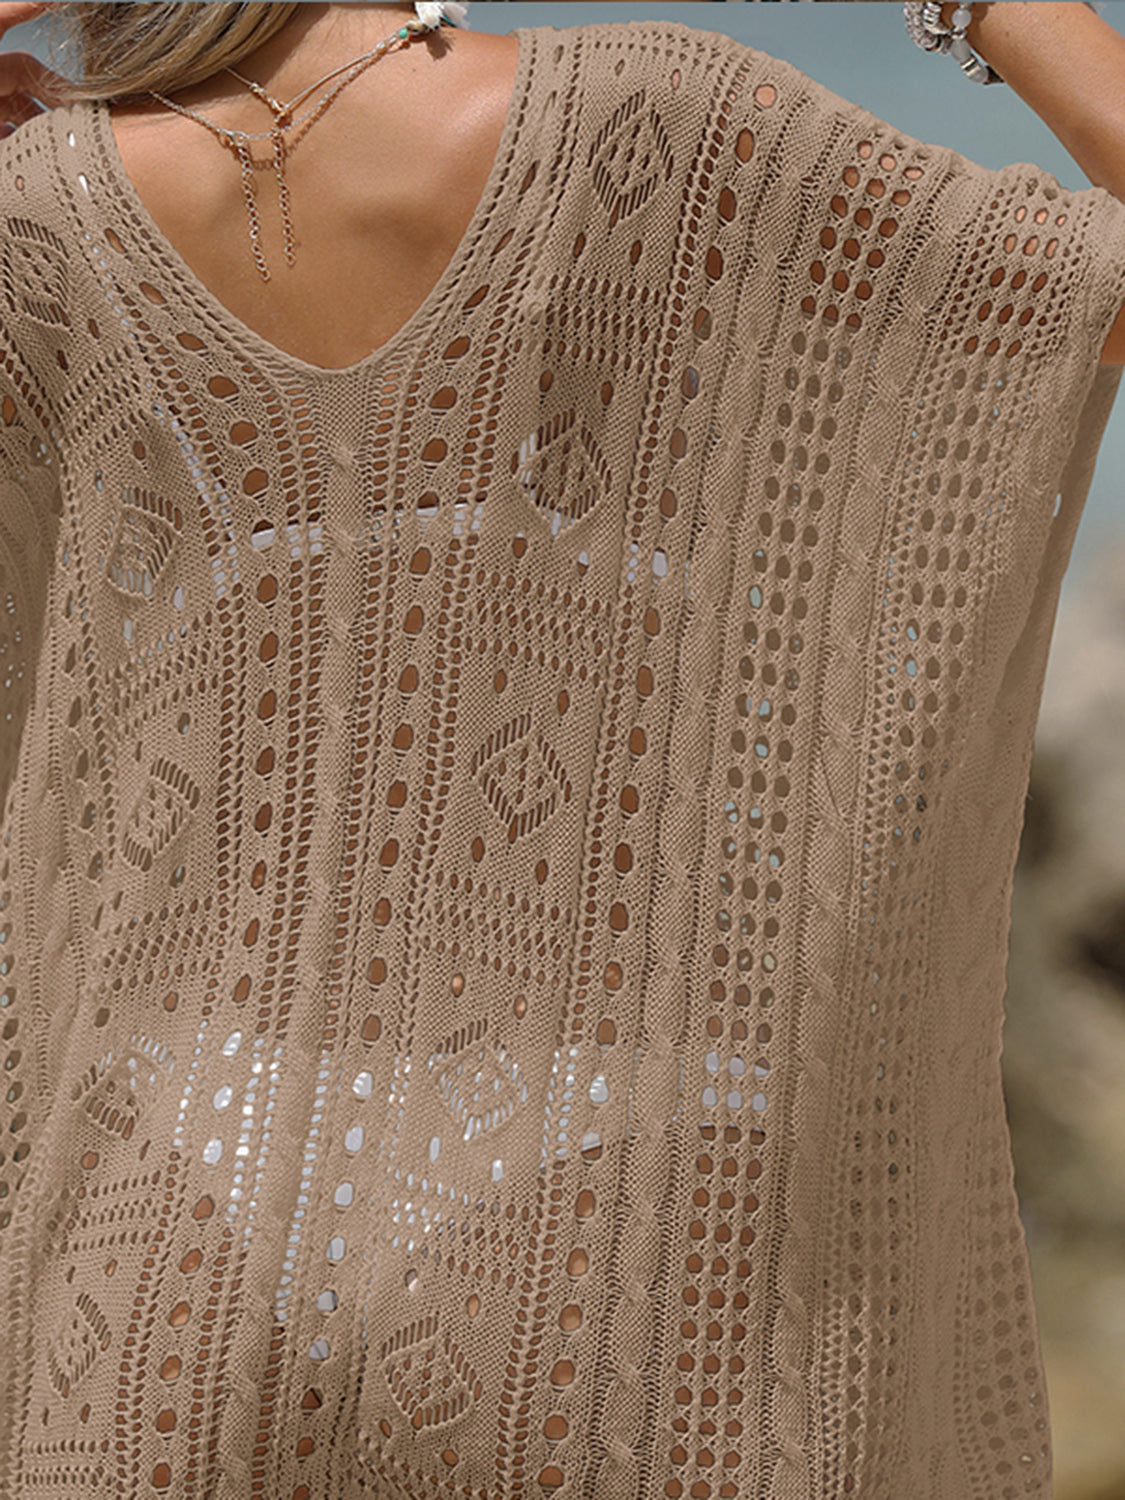 TEEK - Knit Mesh Half Sleeve Cover-Up DRESS TEEK Trend Khaki One Size 